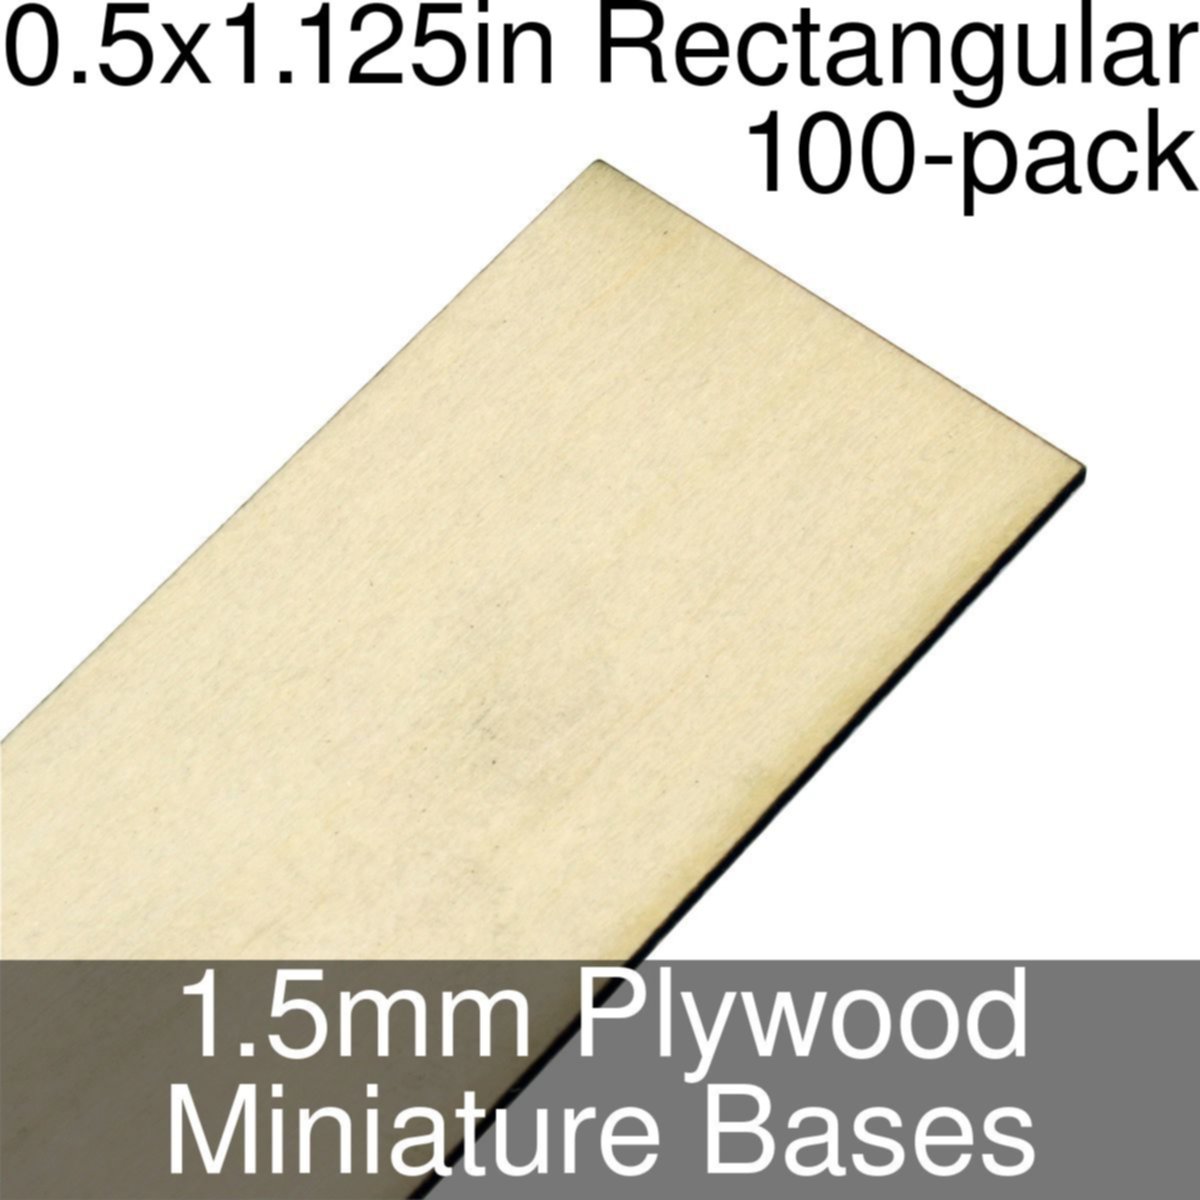 0.5x1.25-inch rectangular miniature bases